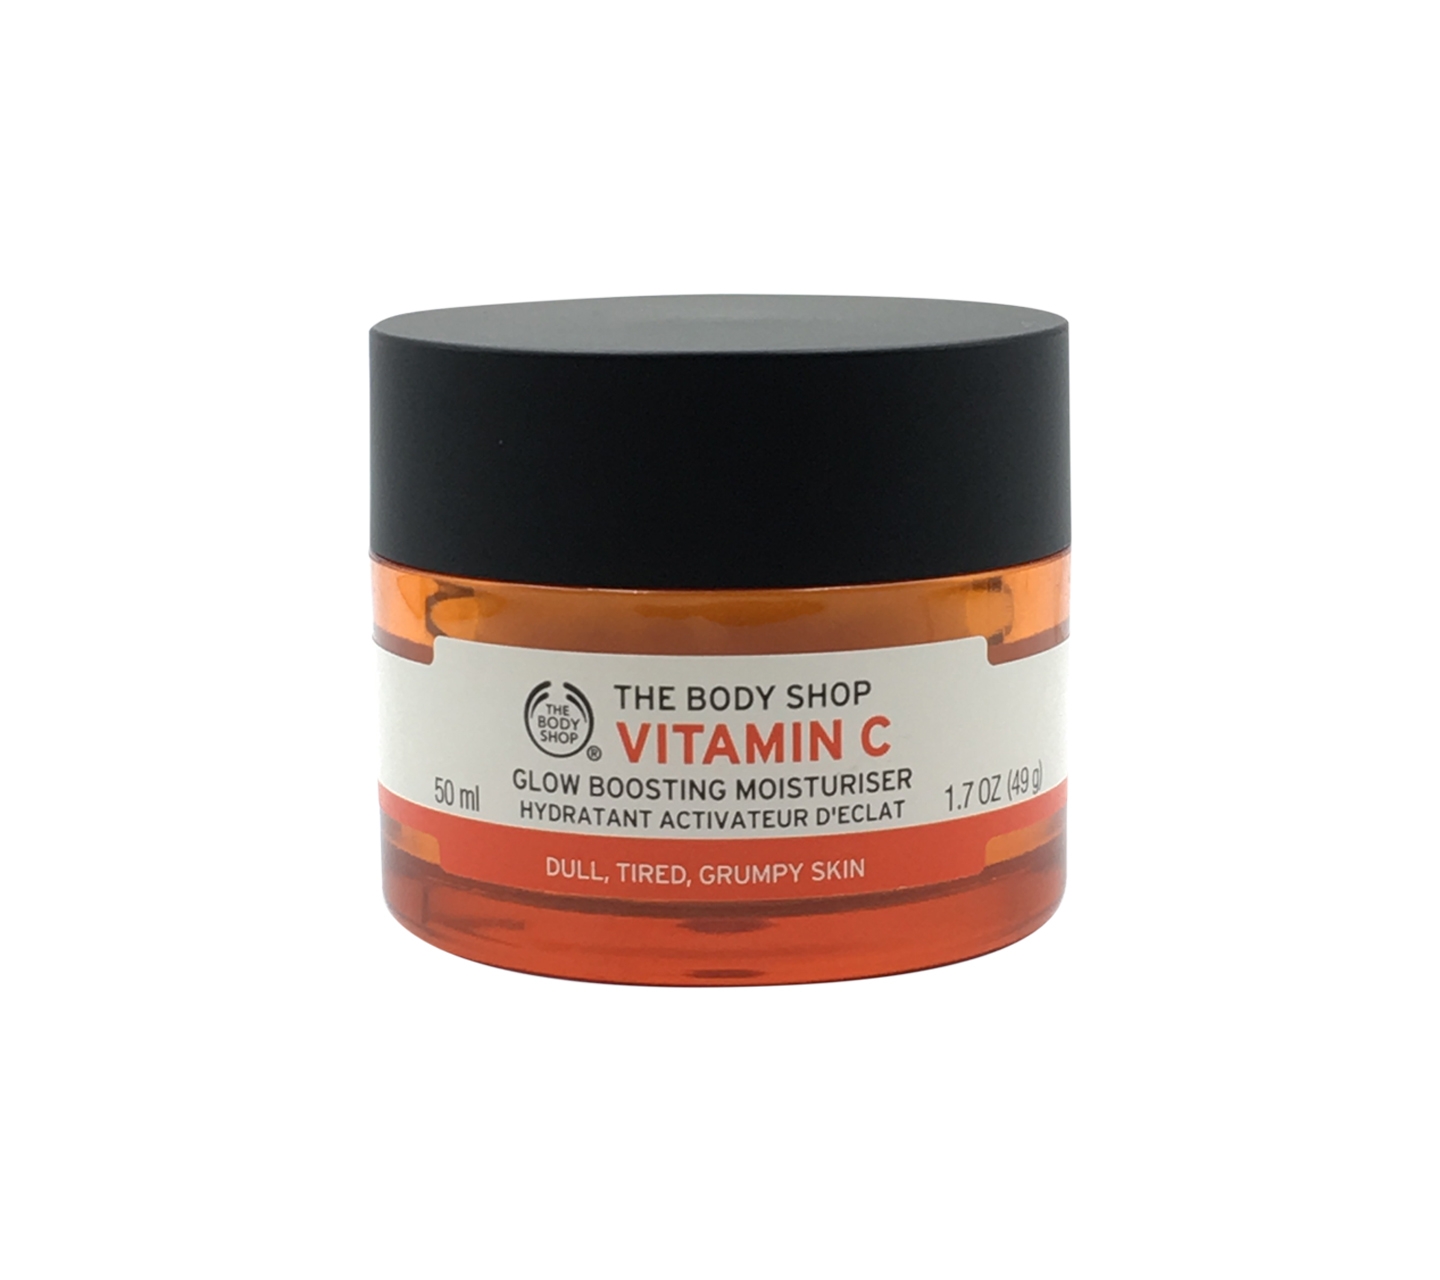 The Body Shop Vitamin C Glow Boosting Moisturiser Hydratant Activateur D'eclat Skin Care